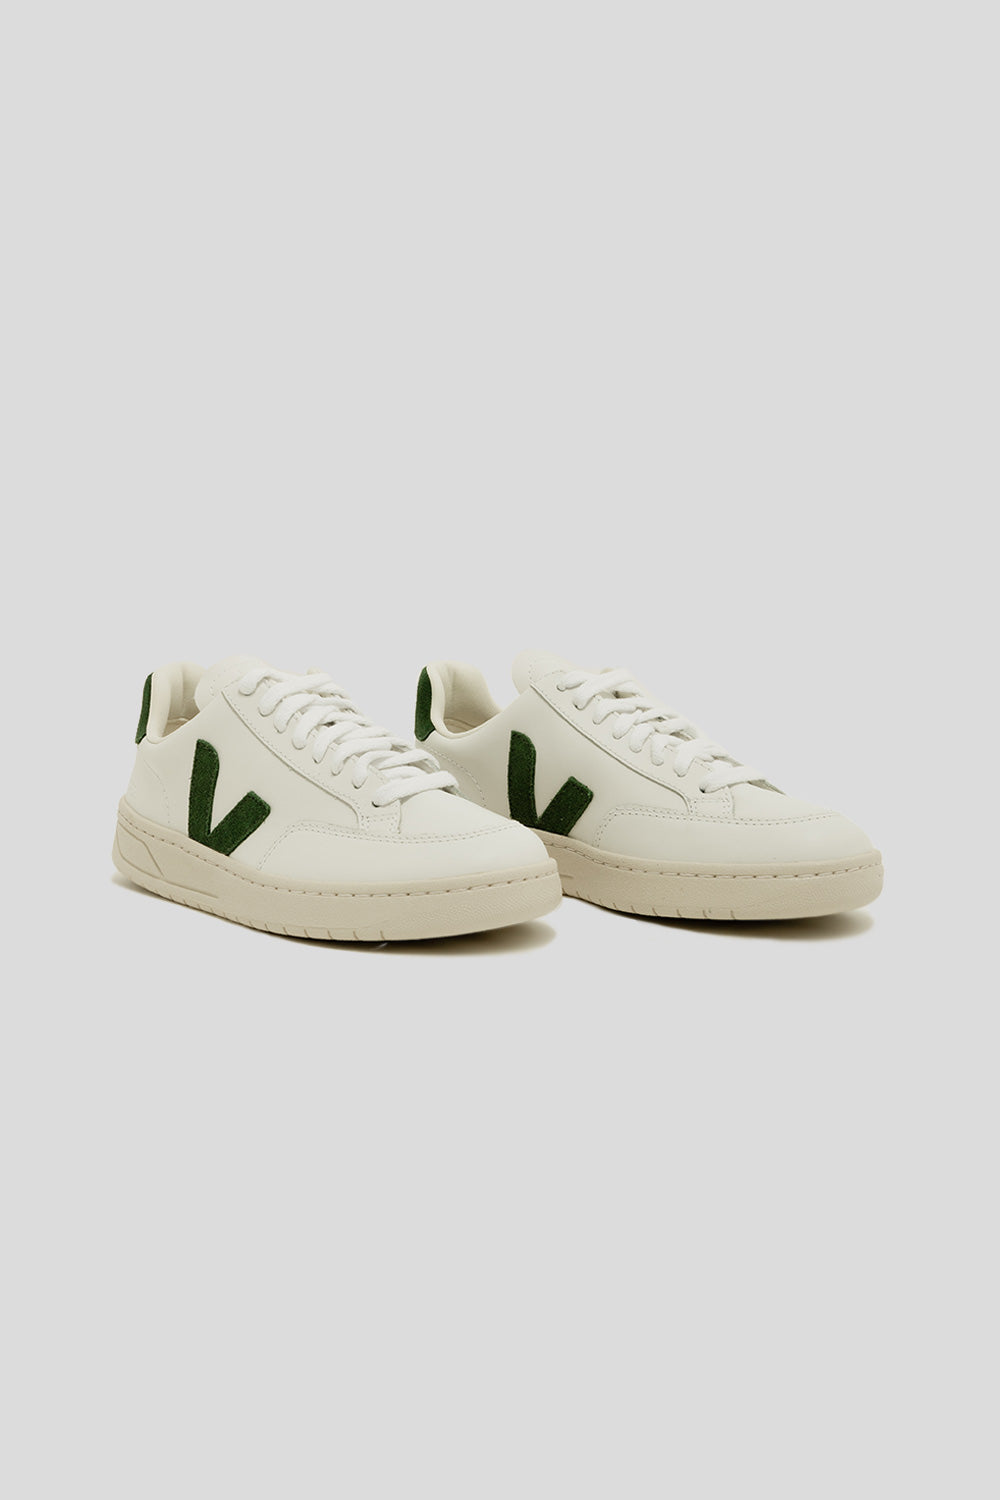 veja-v-12-extra-white-leather-cypress-green